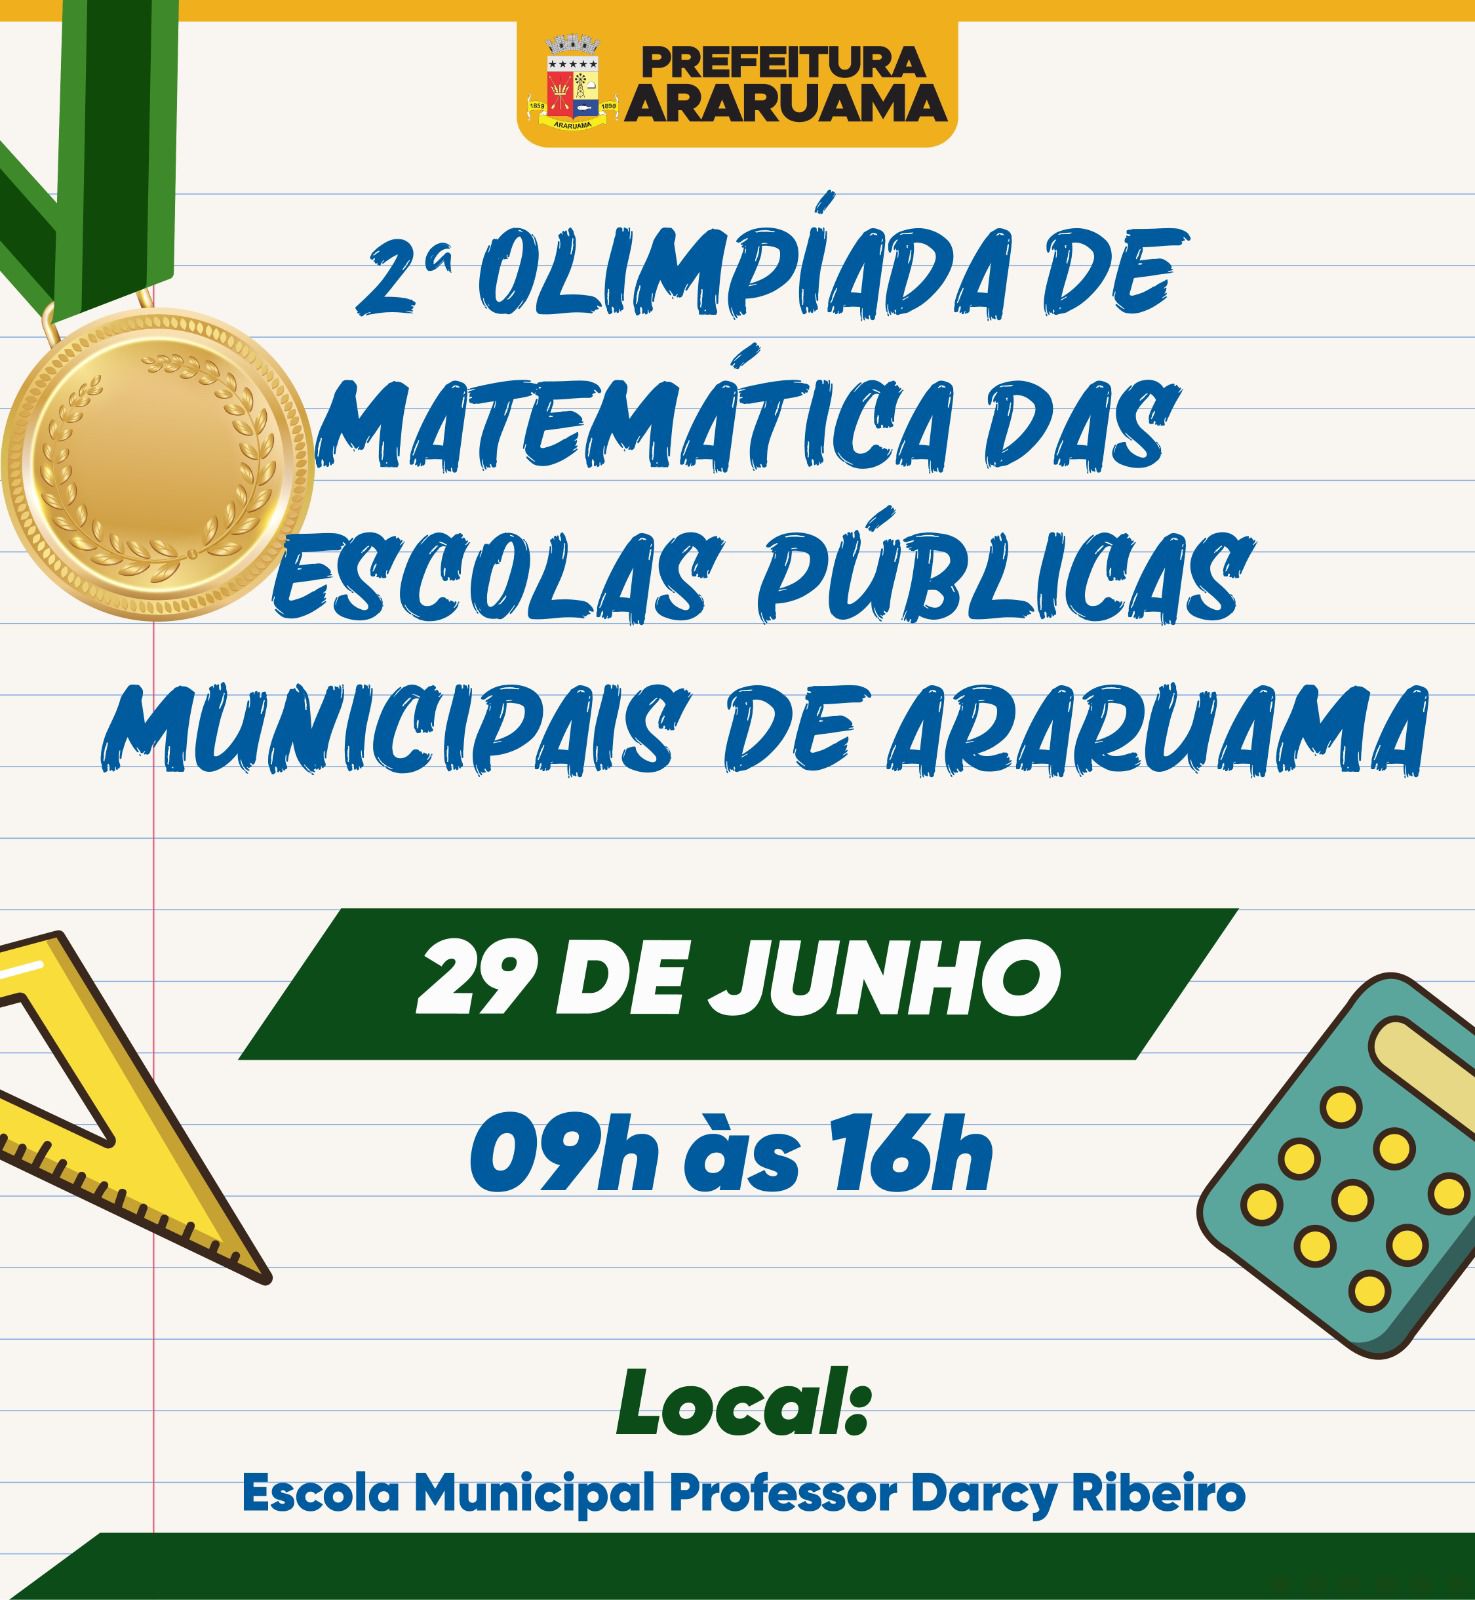 Prefeitura de Araruama vai realizar a etapa final da 2ª Olimpíada de Matemática das escolas municipais